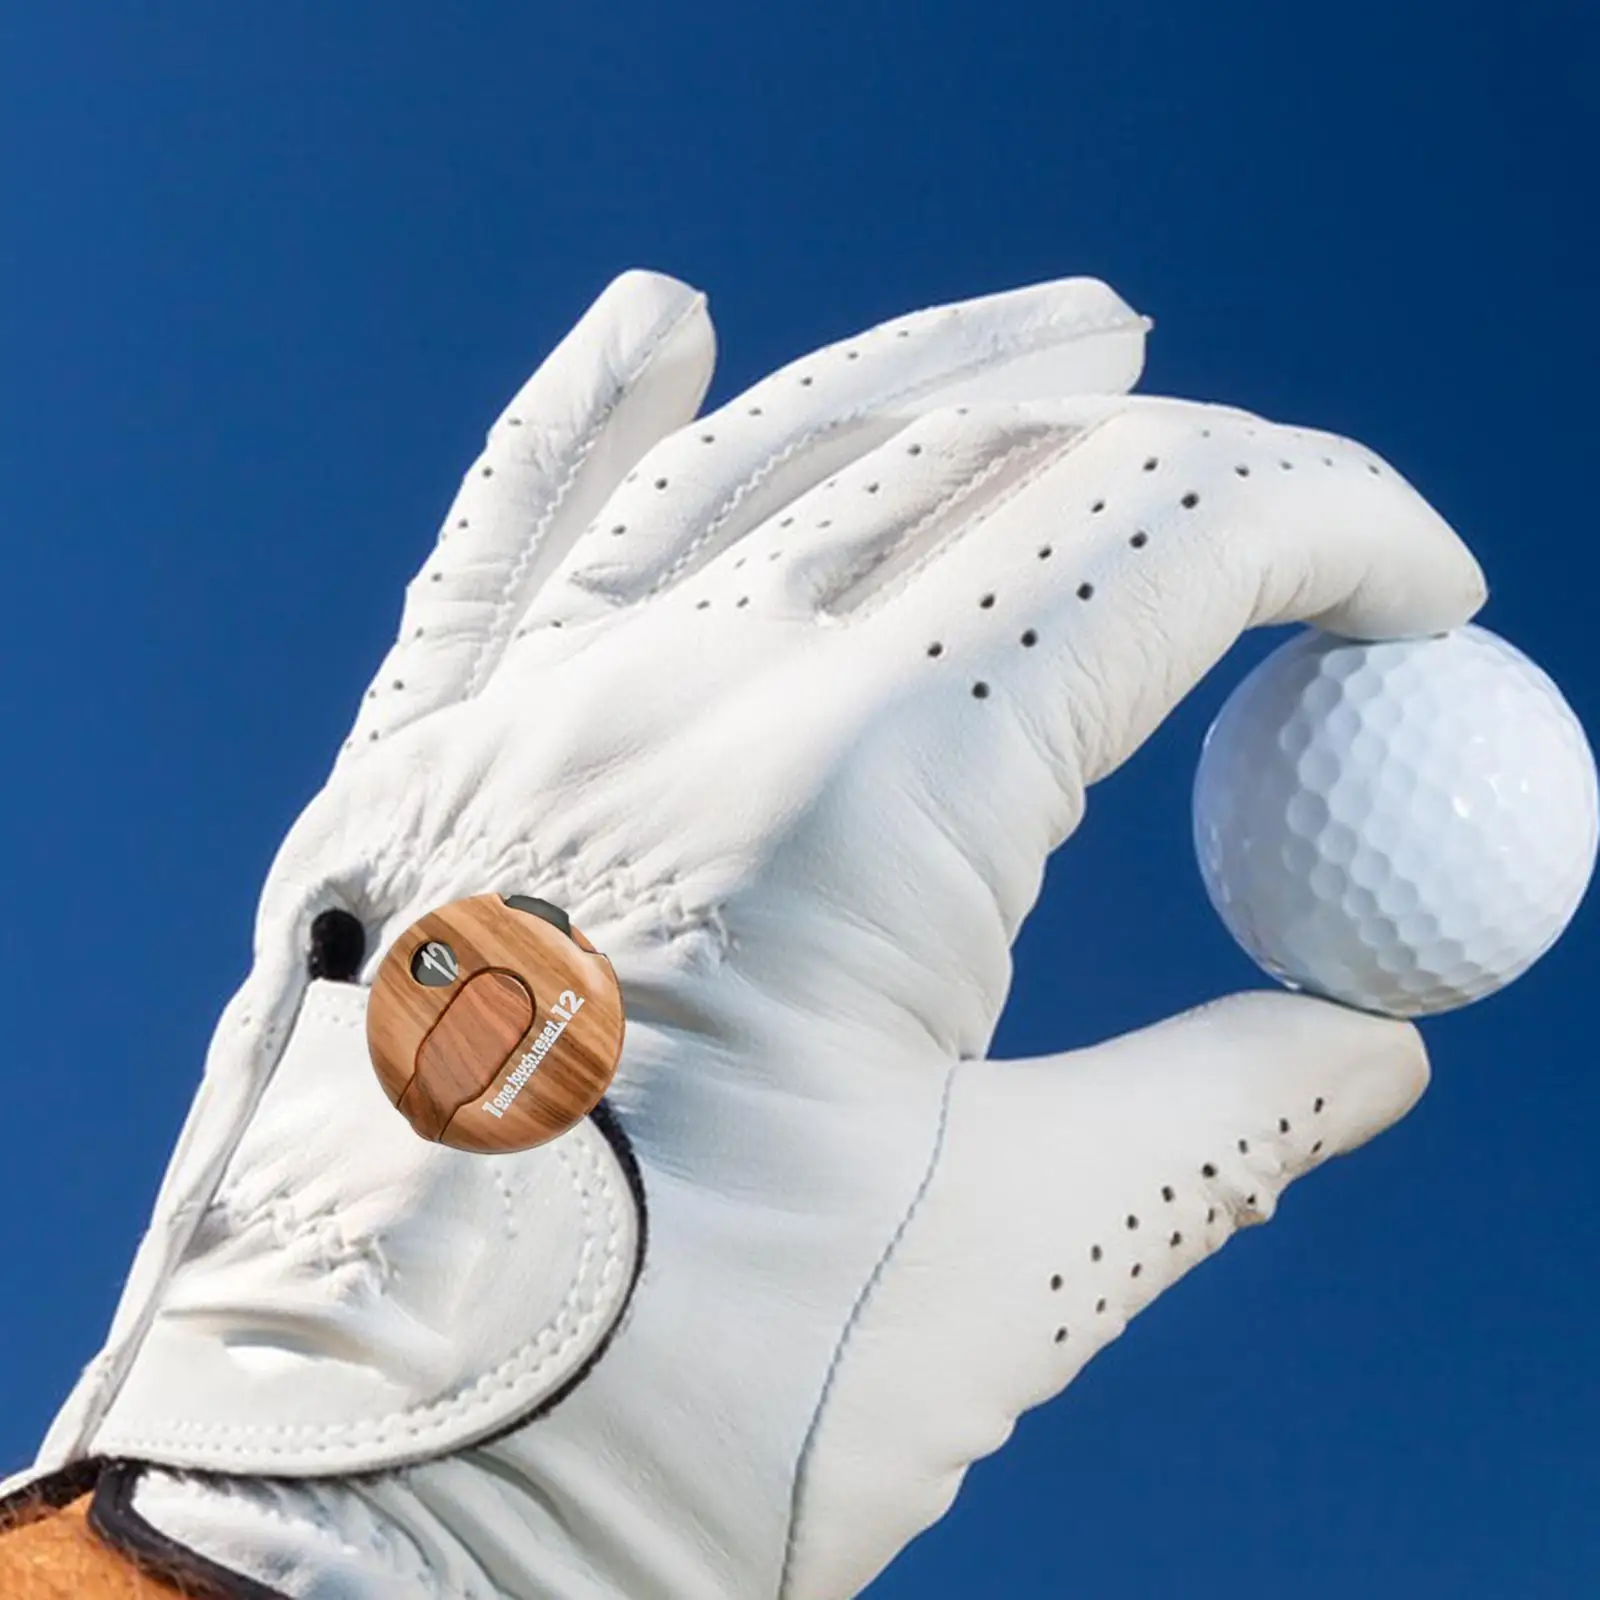 Mini Golf Score Stroke Counter Scorekeeper Scoring Keeper with Hat Clip up to 12 Shots Score Golf Stroke Counter Golfer Gift